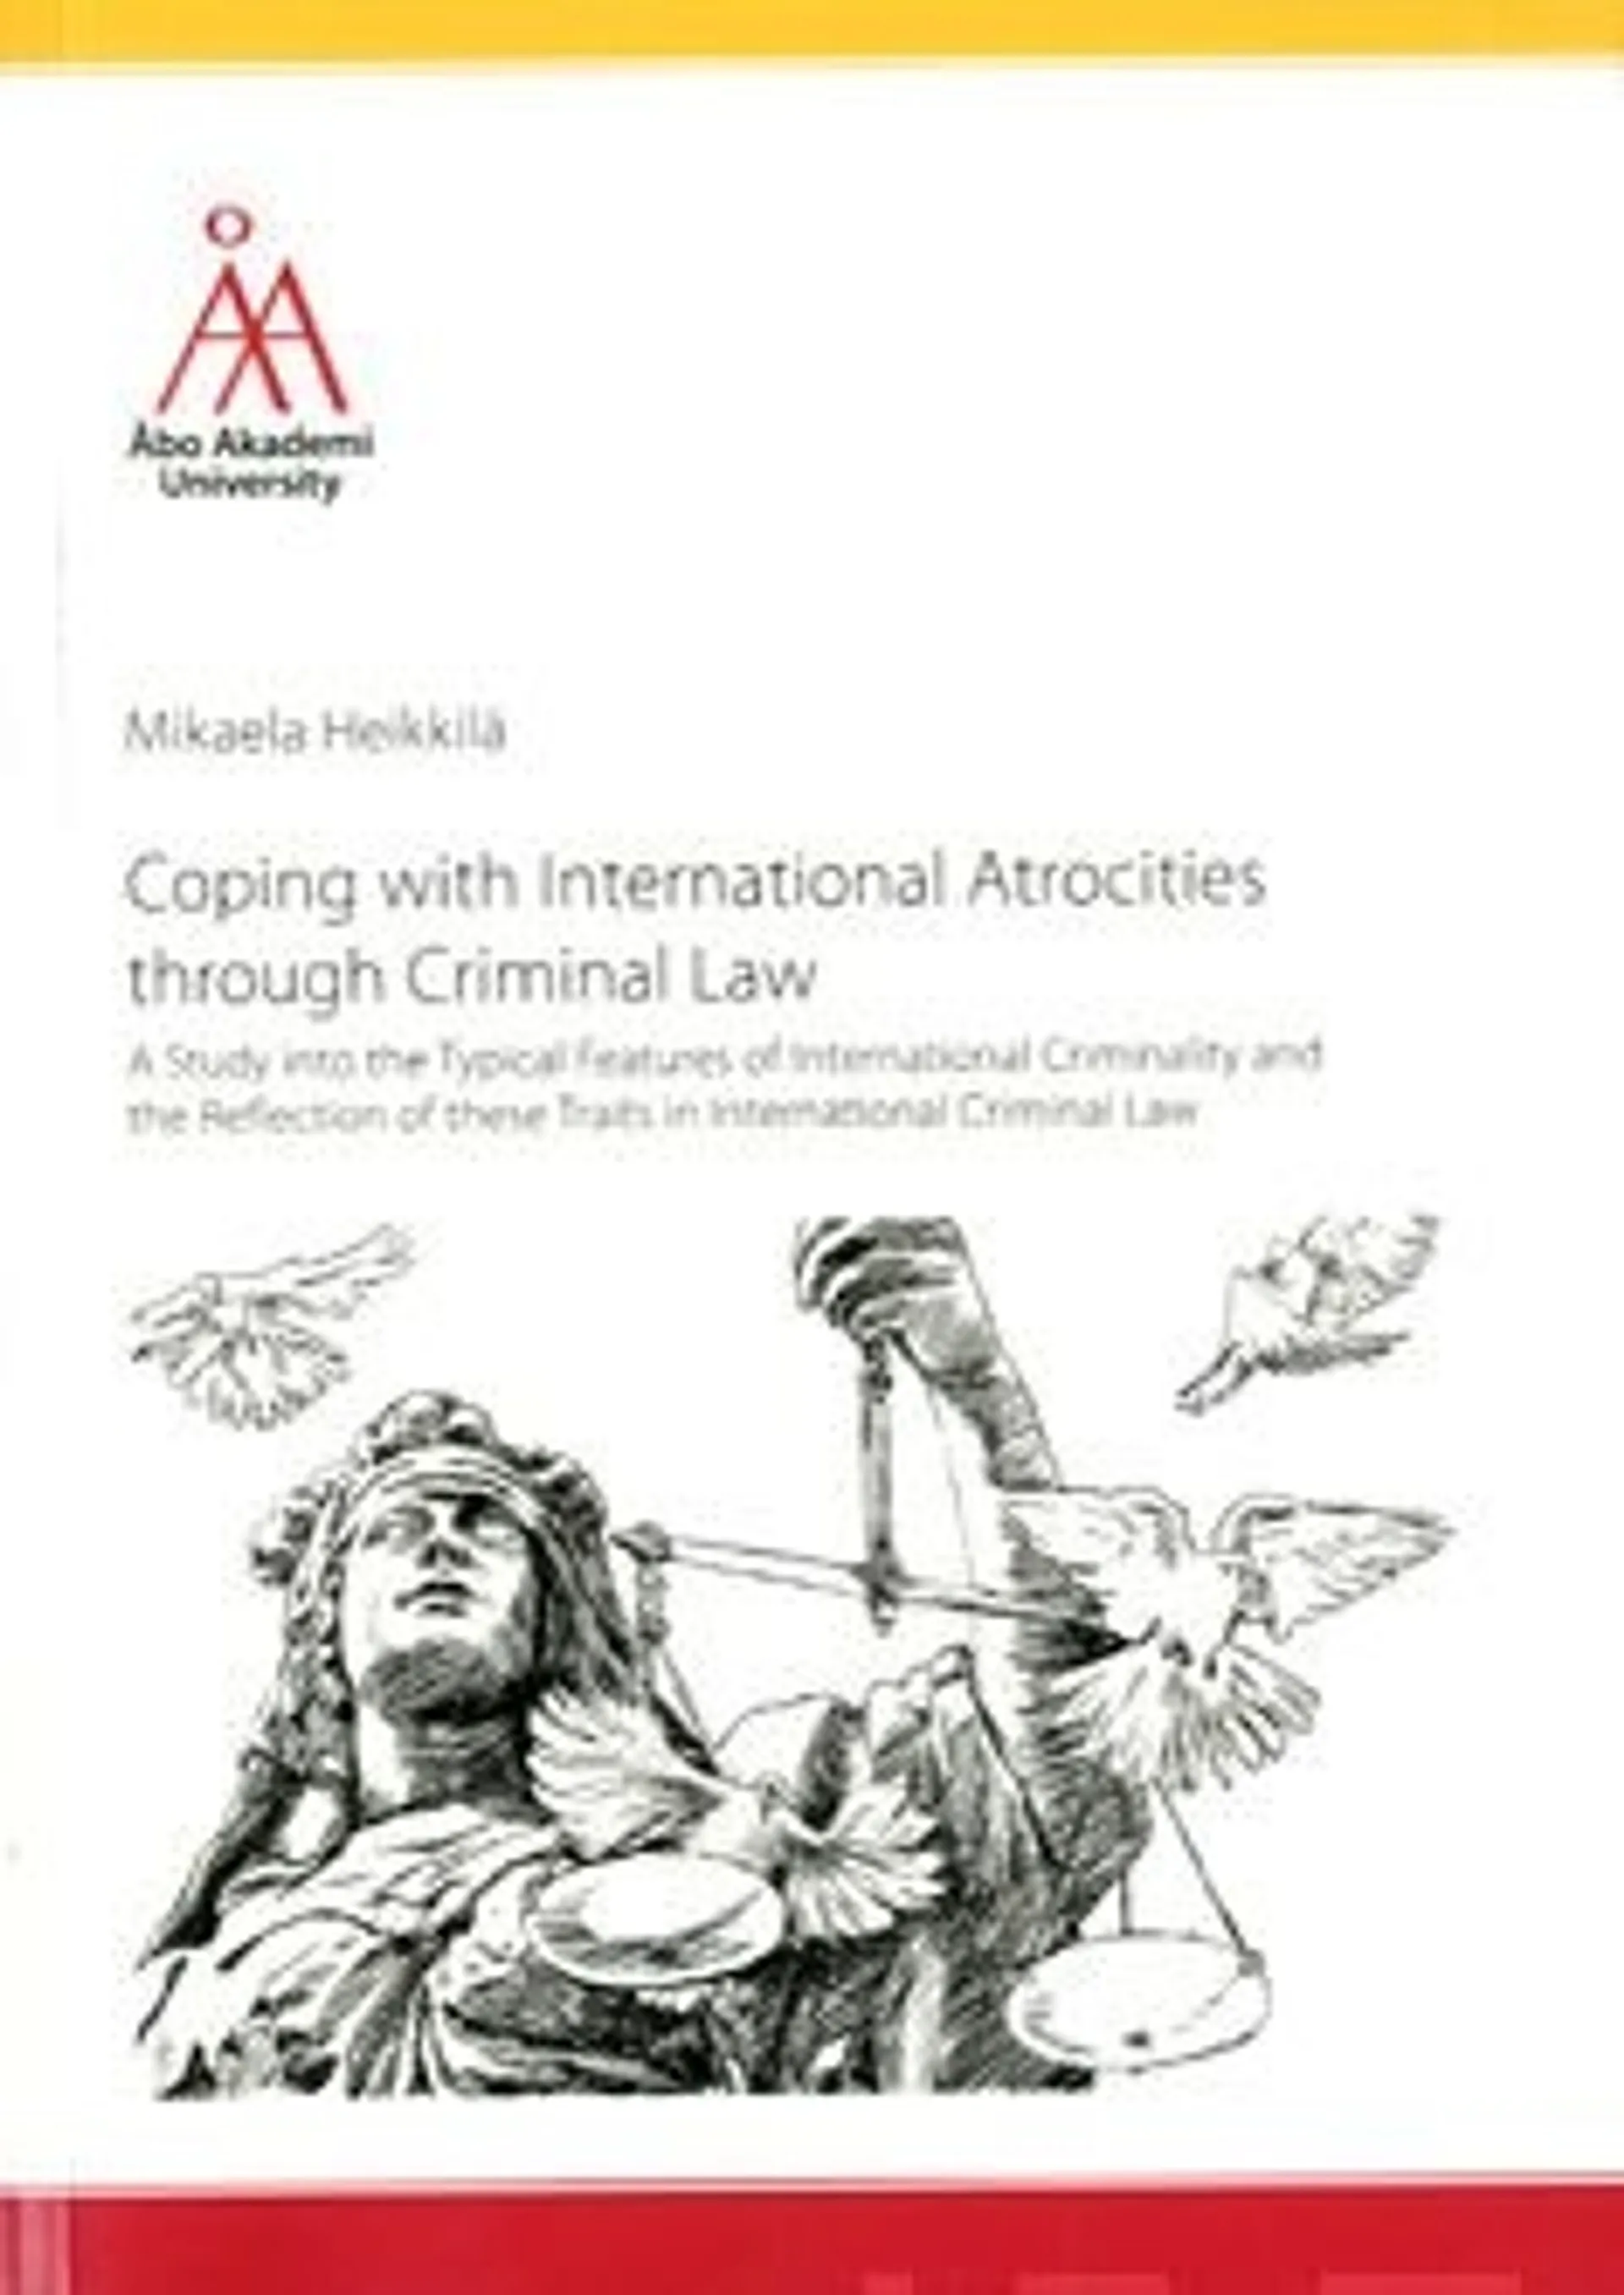 Heikkilä, Coping with International Atrocities through Criminal Law